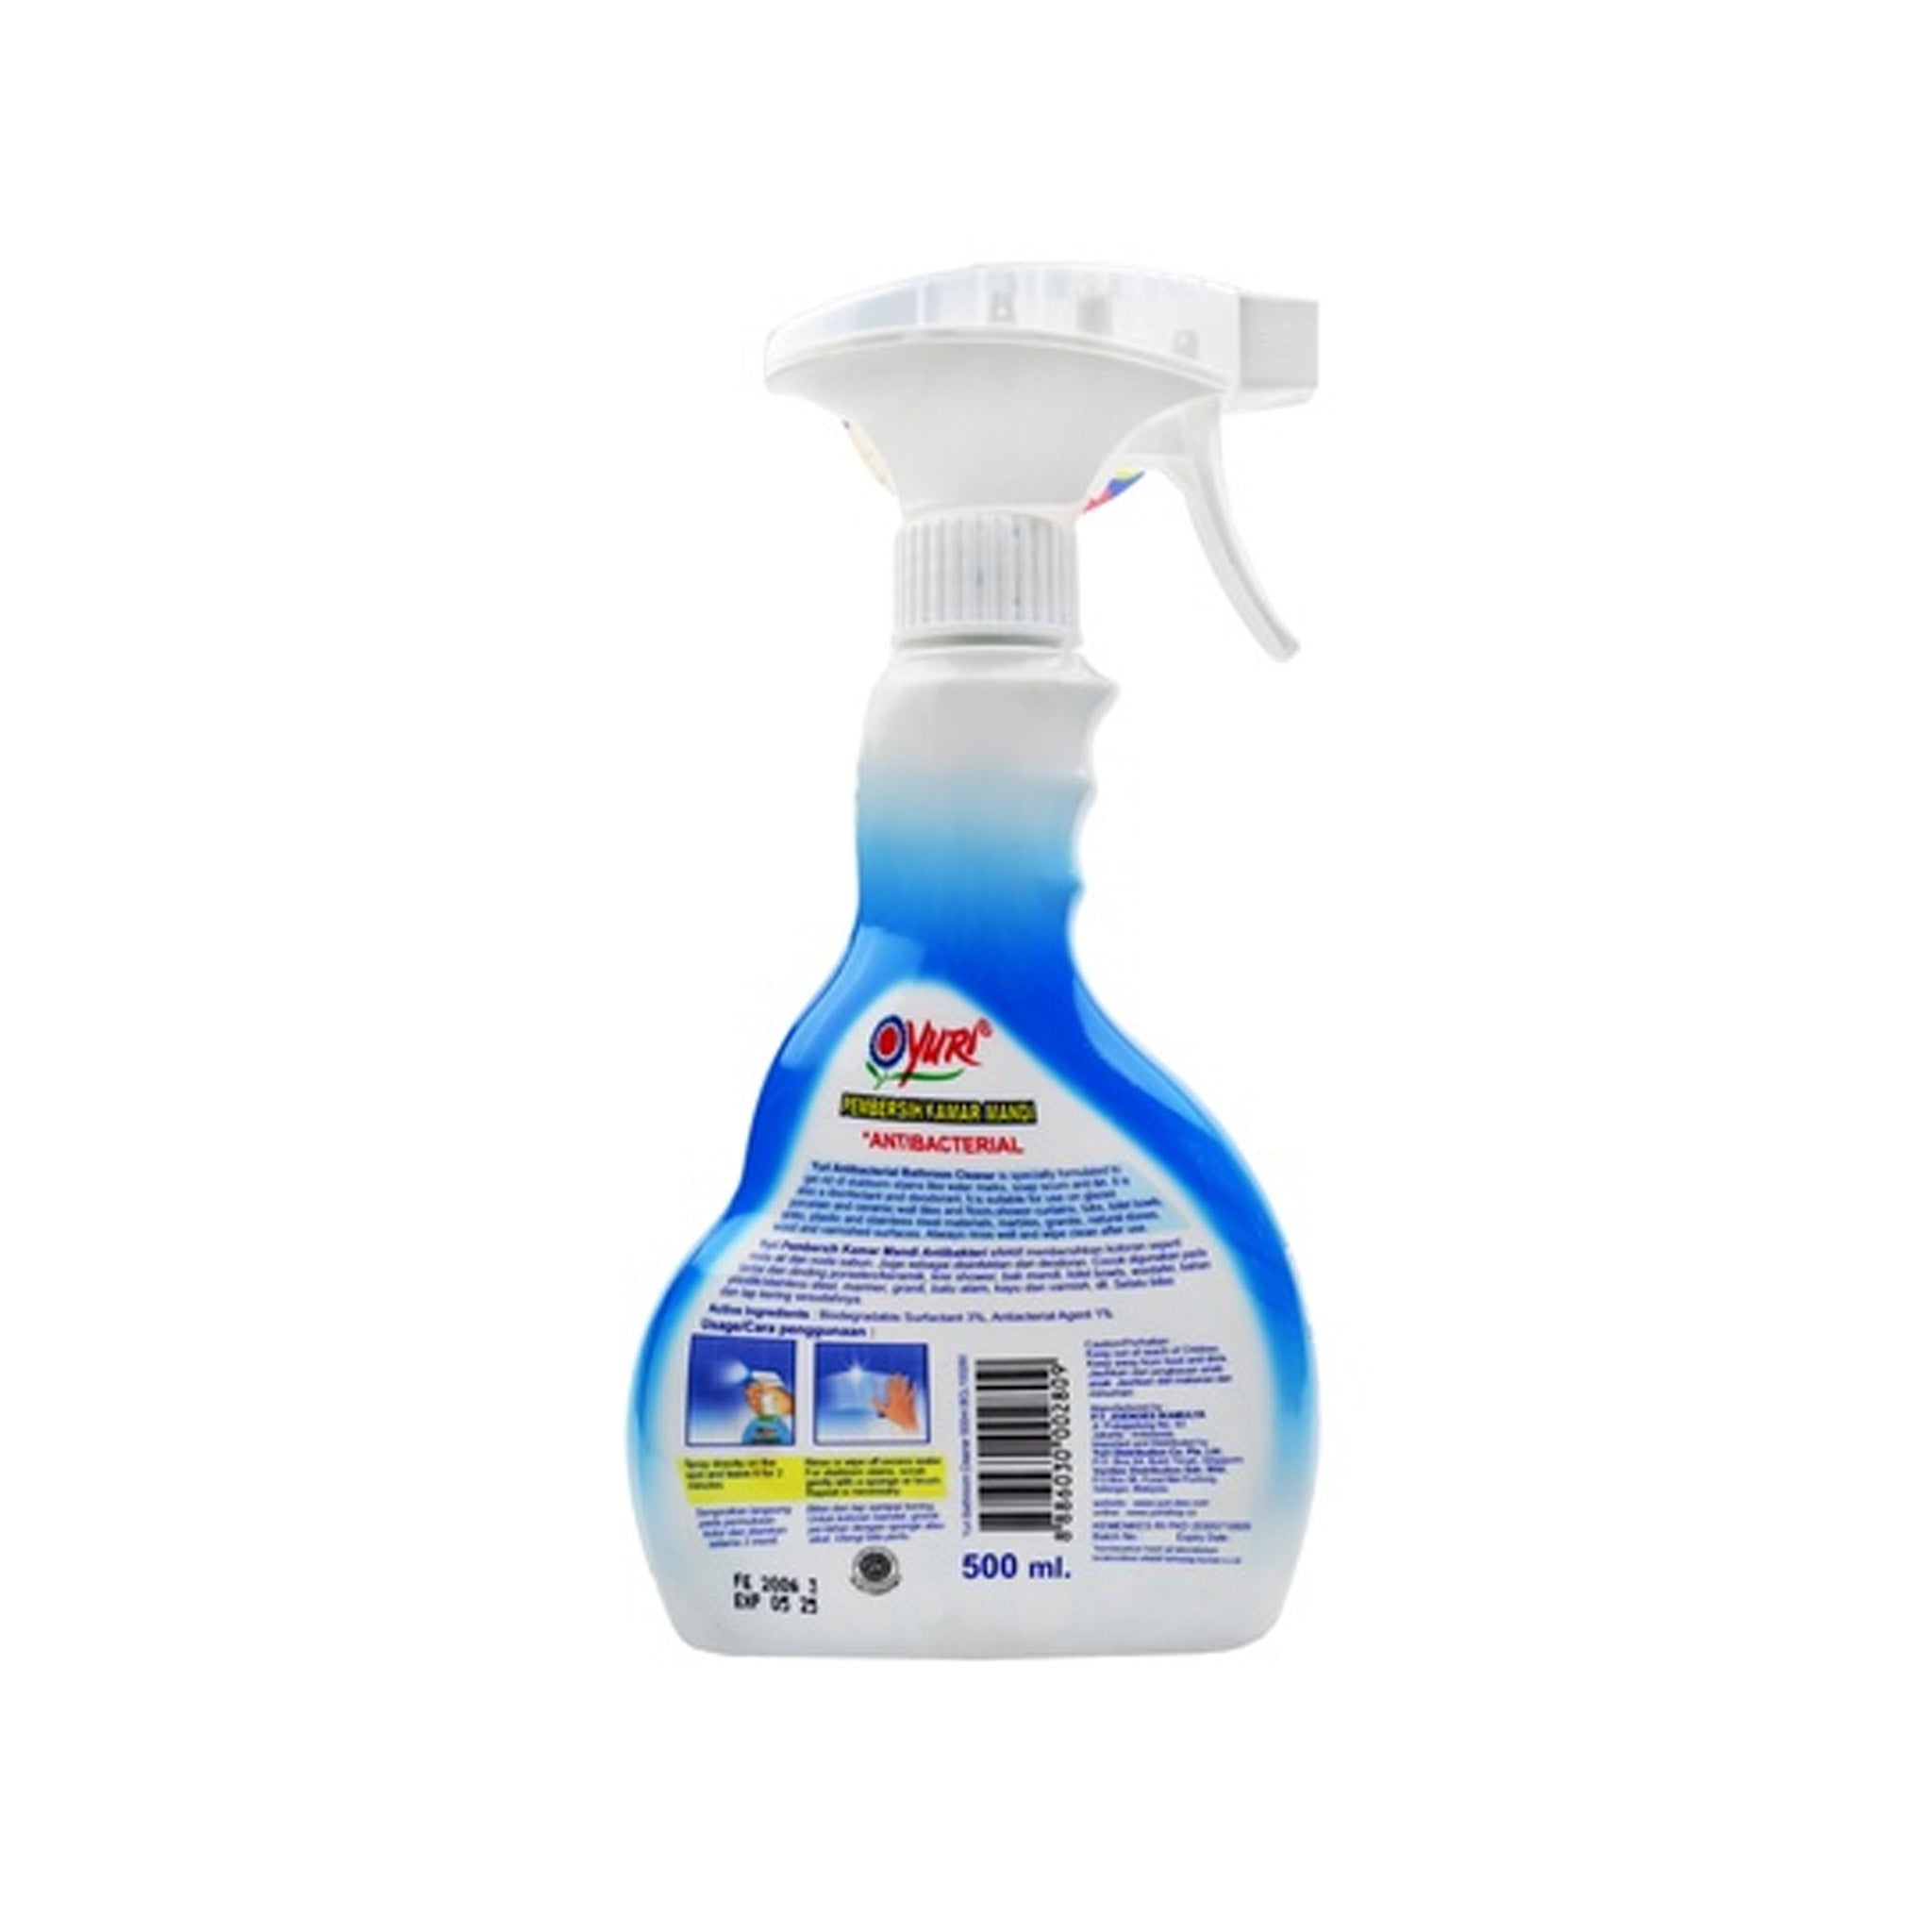 Yuri Bathroom Cleaner Botol Spray 500ml